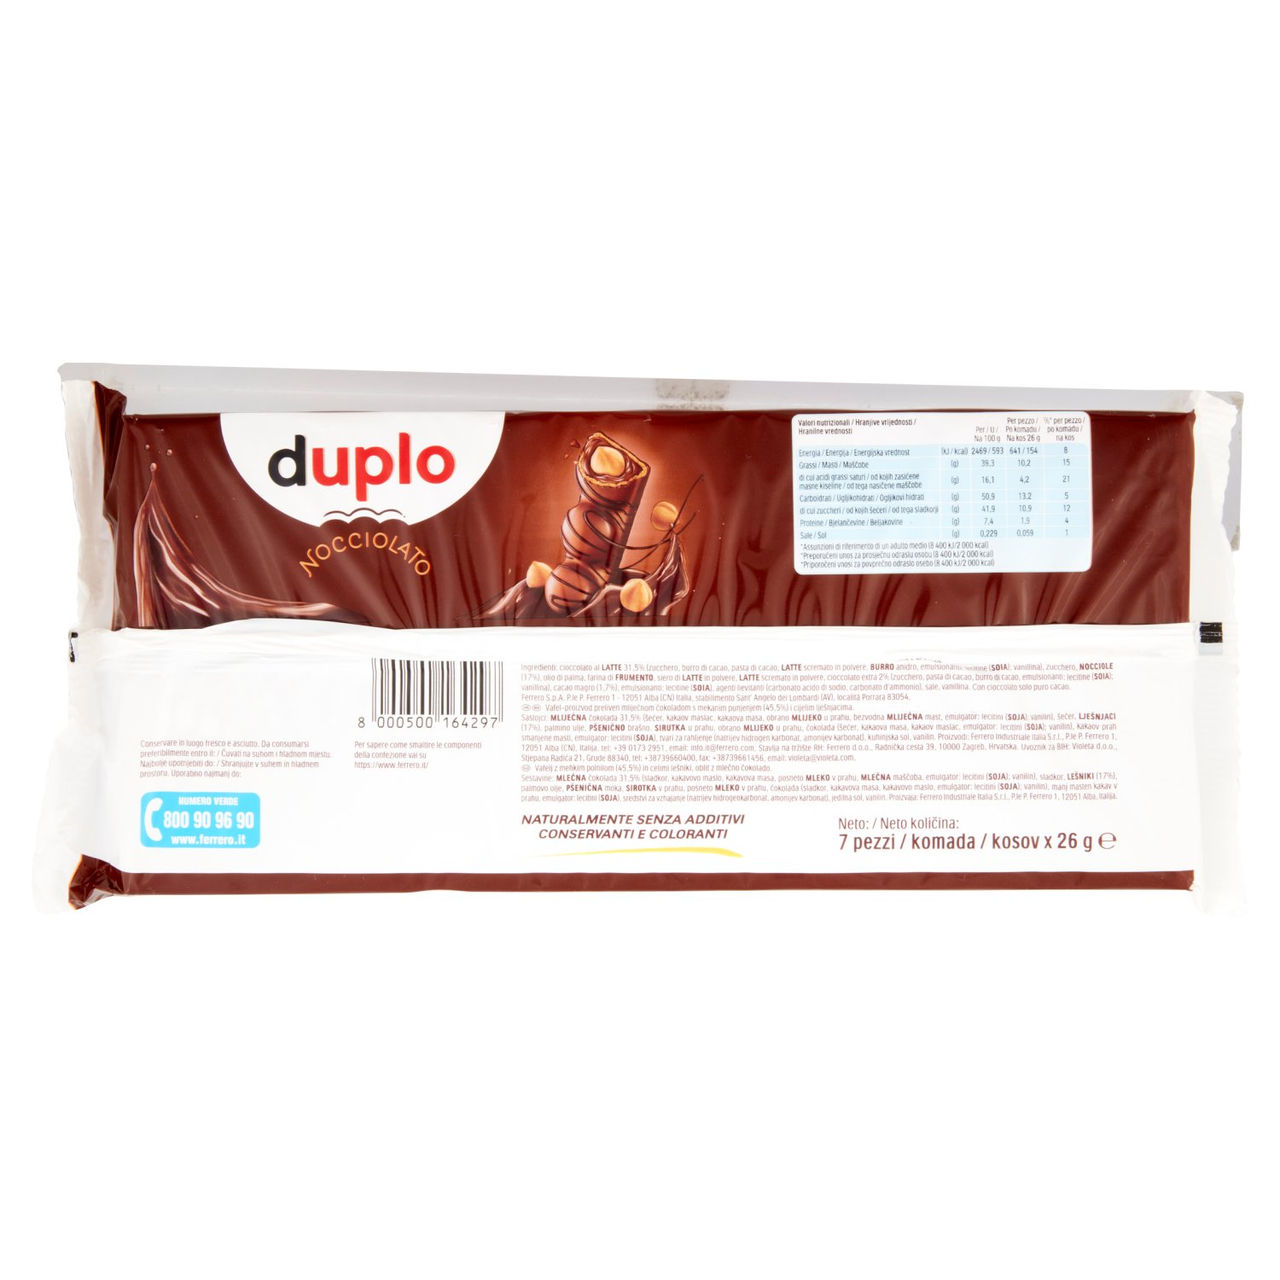 Ferrero Duplo Nocciolato 7 x 26 g